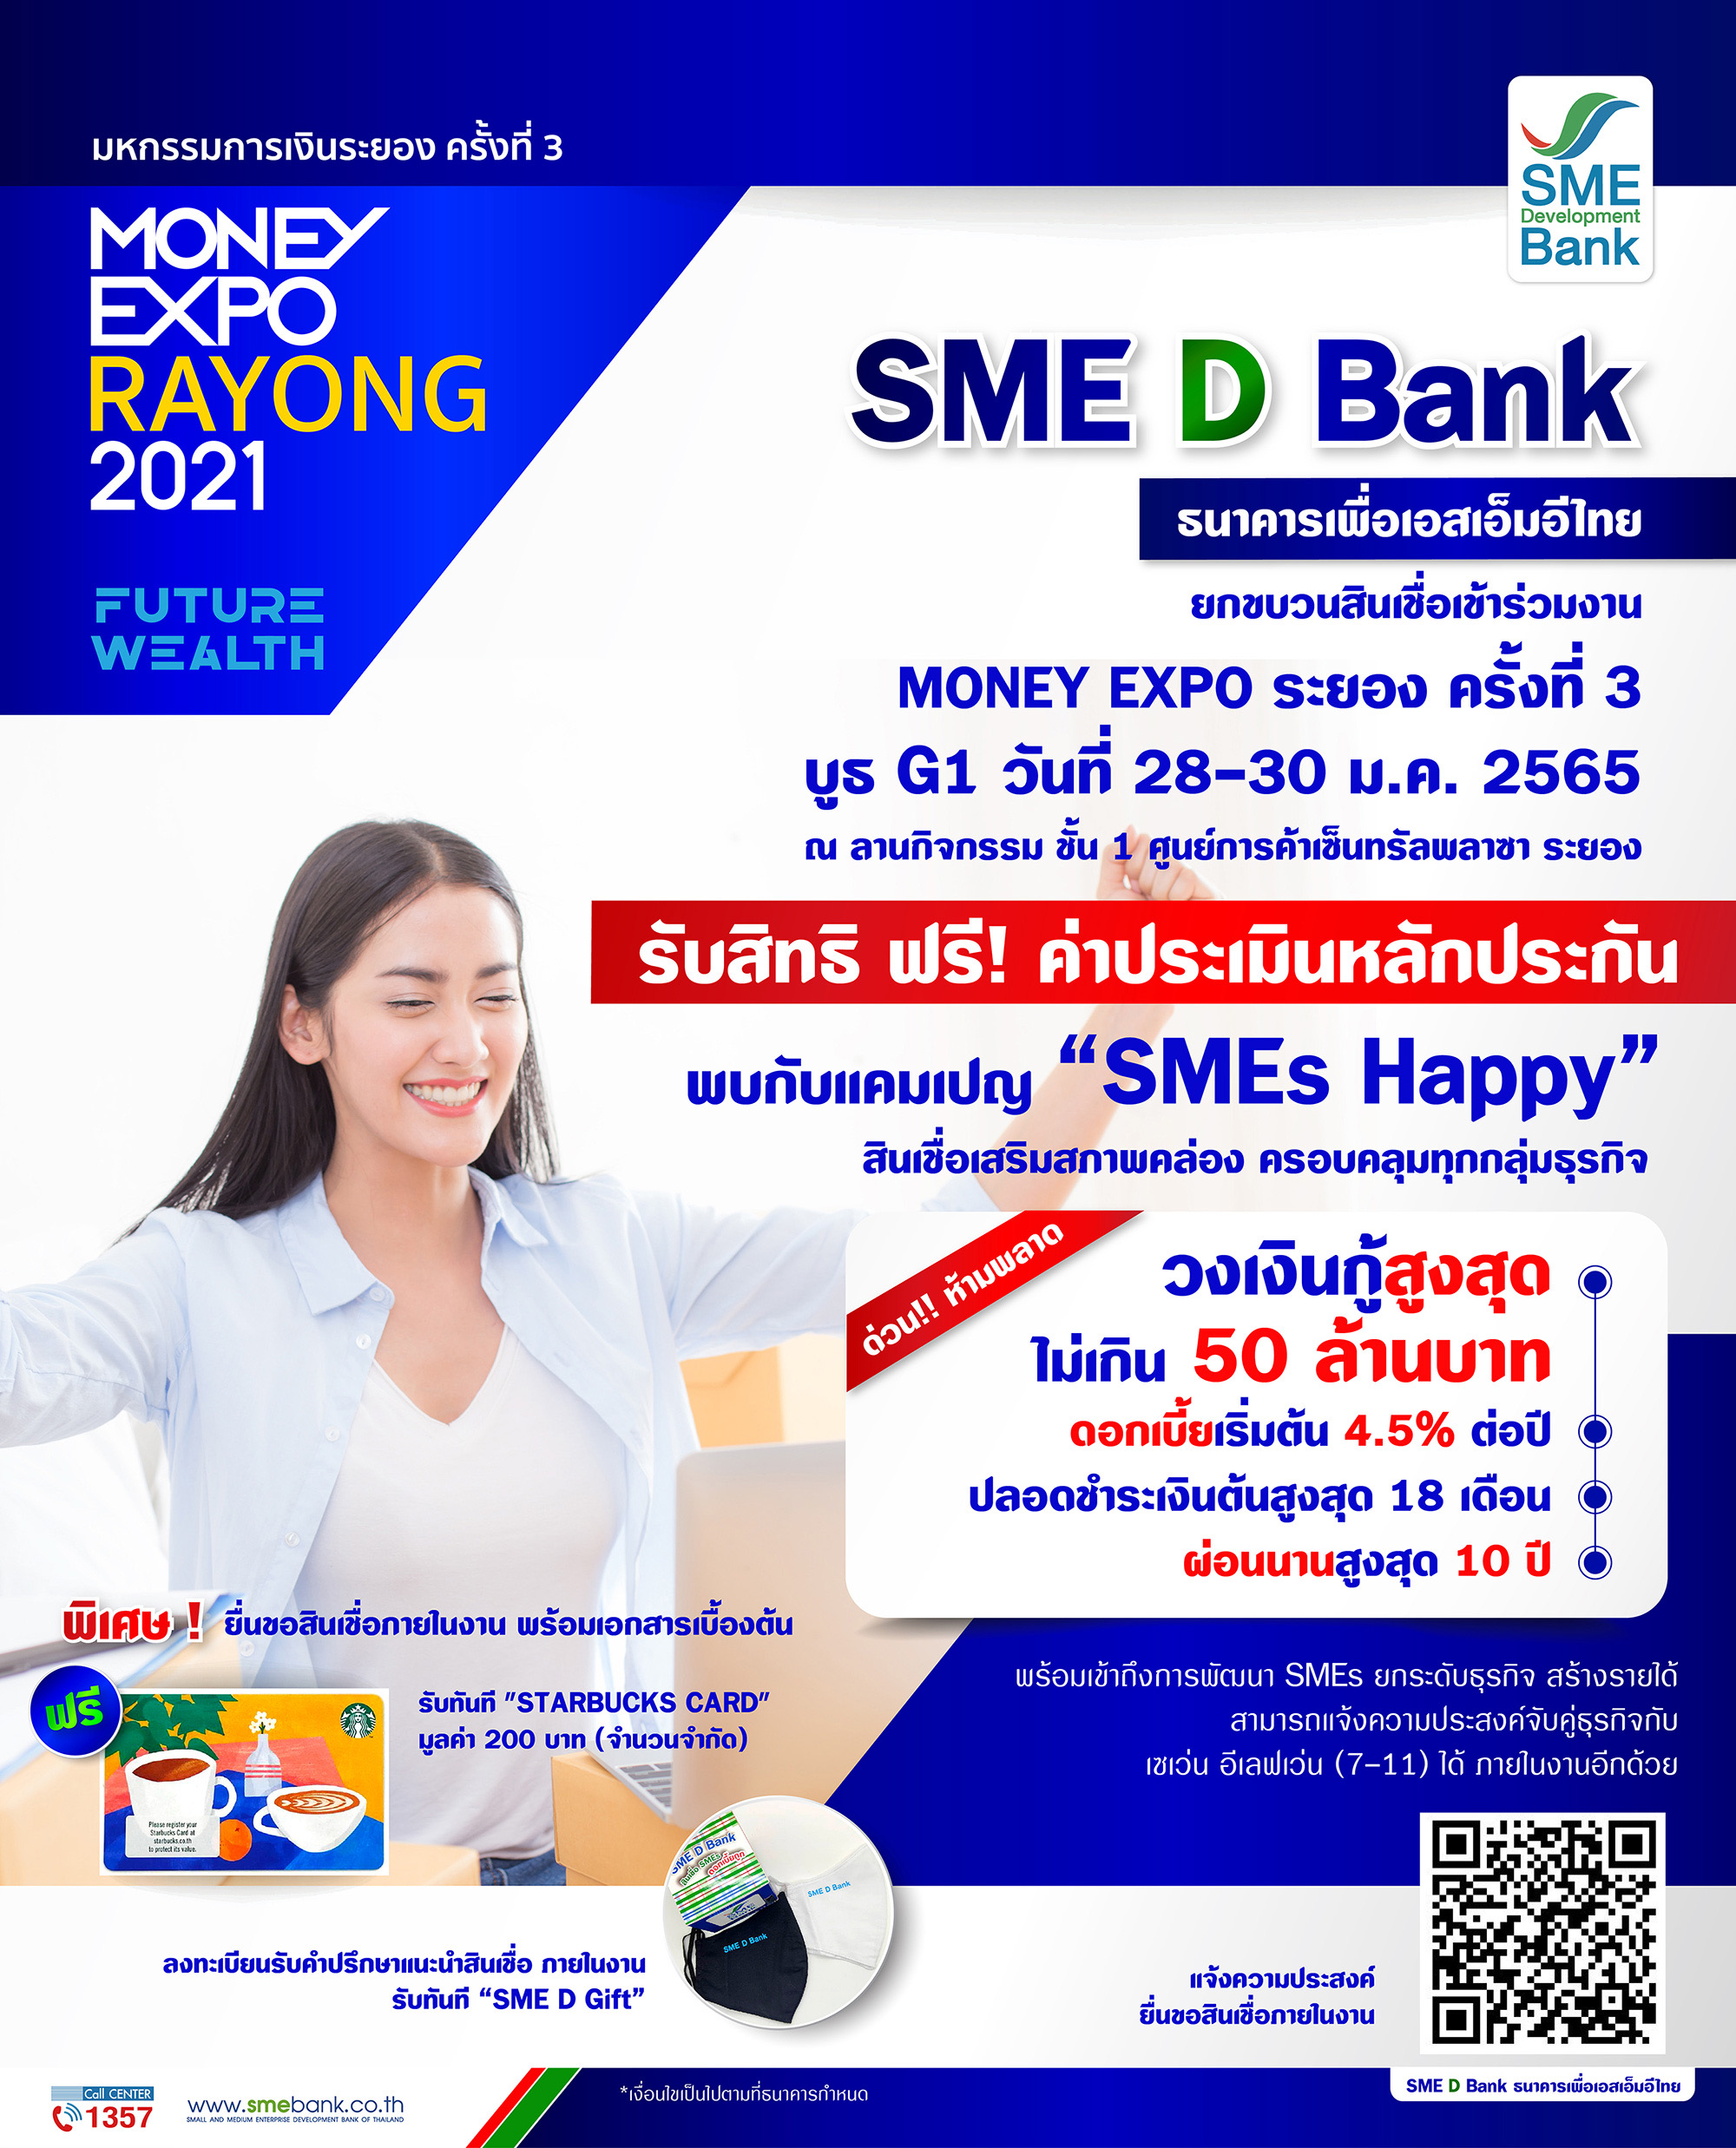 SME D Bank ร่วมงาน ‘MONEY EXPO RAYONG’ เสิร์ฟแคมเปญ SMEs Happy  ผ่อนนาน 10 ปี ฟรีค่าประเมินหลักประกัน